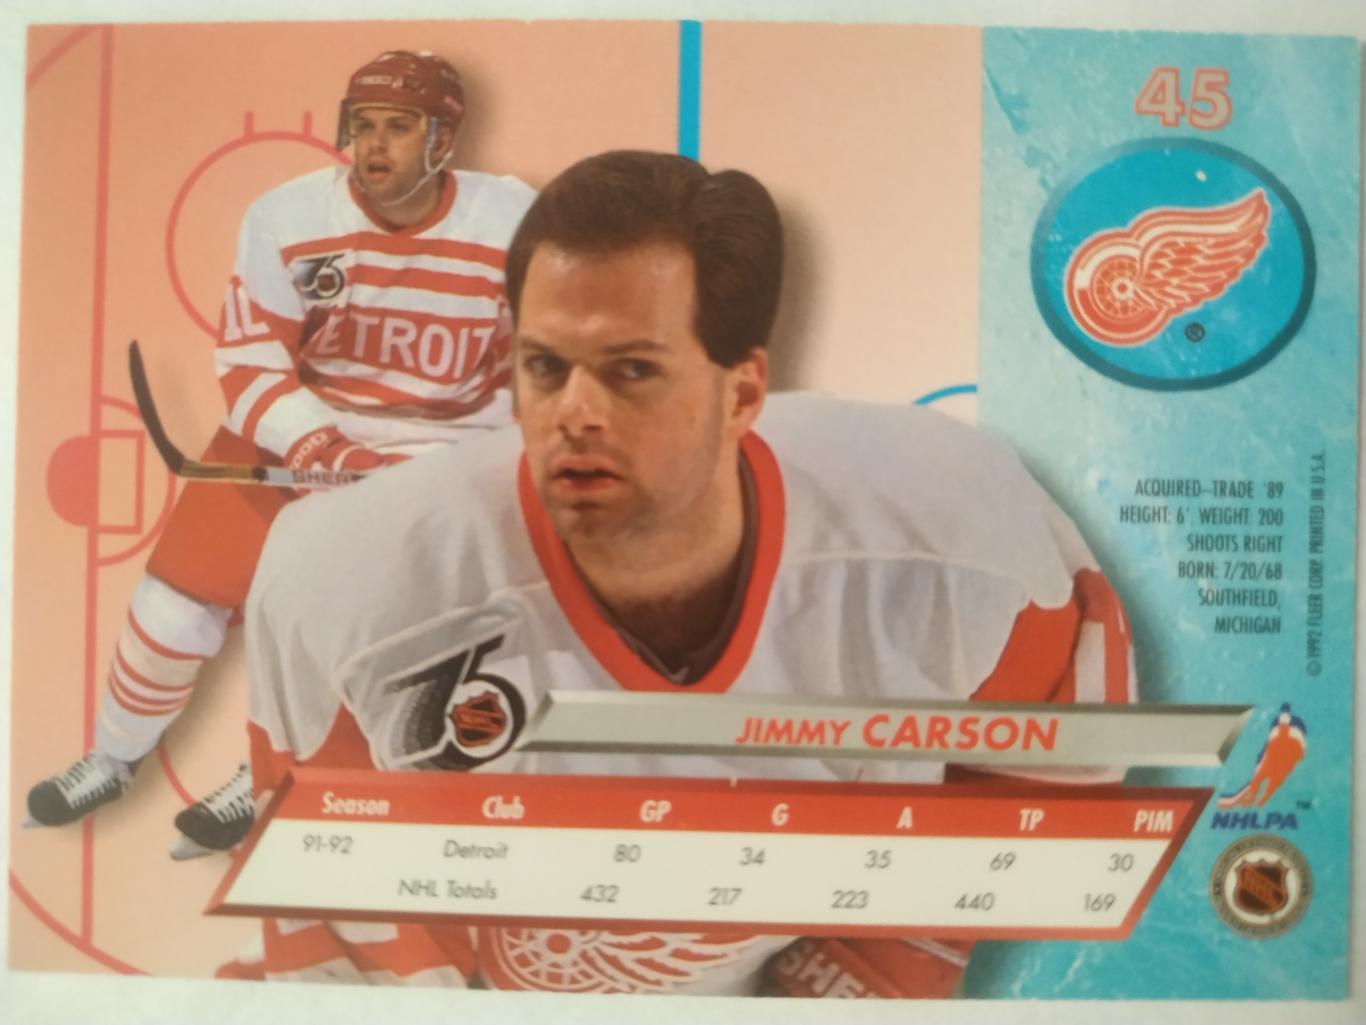 ХОККЕЙ КАРТОЧКА НХЛ FLEER ULTRA 1992-93 NHL JIMMY CARSON DETROIT RED WINGS #45 1